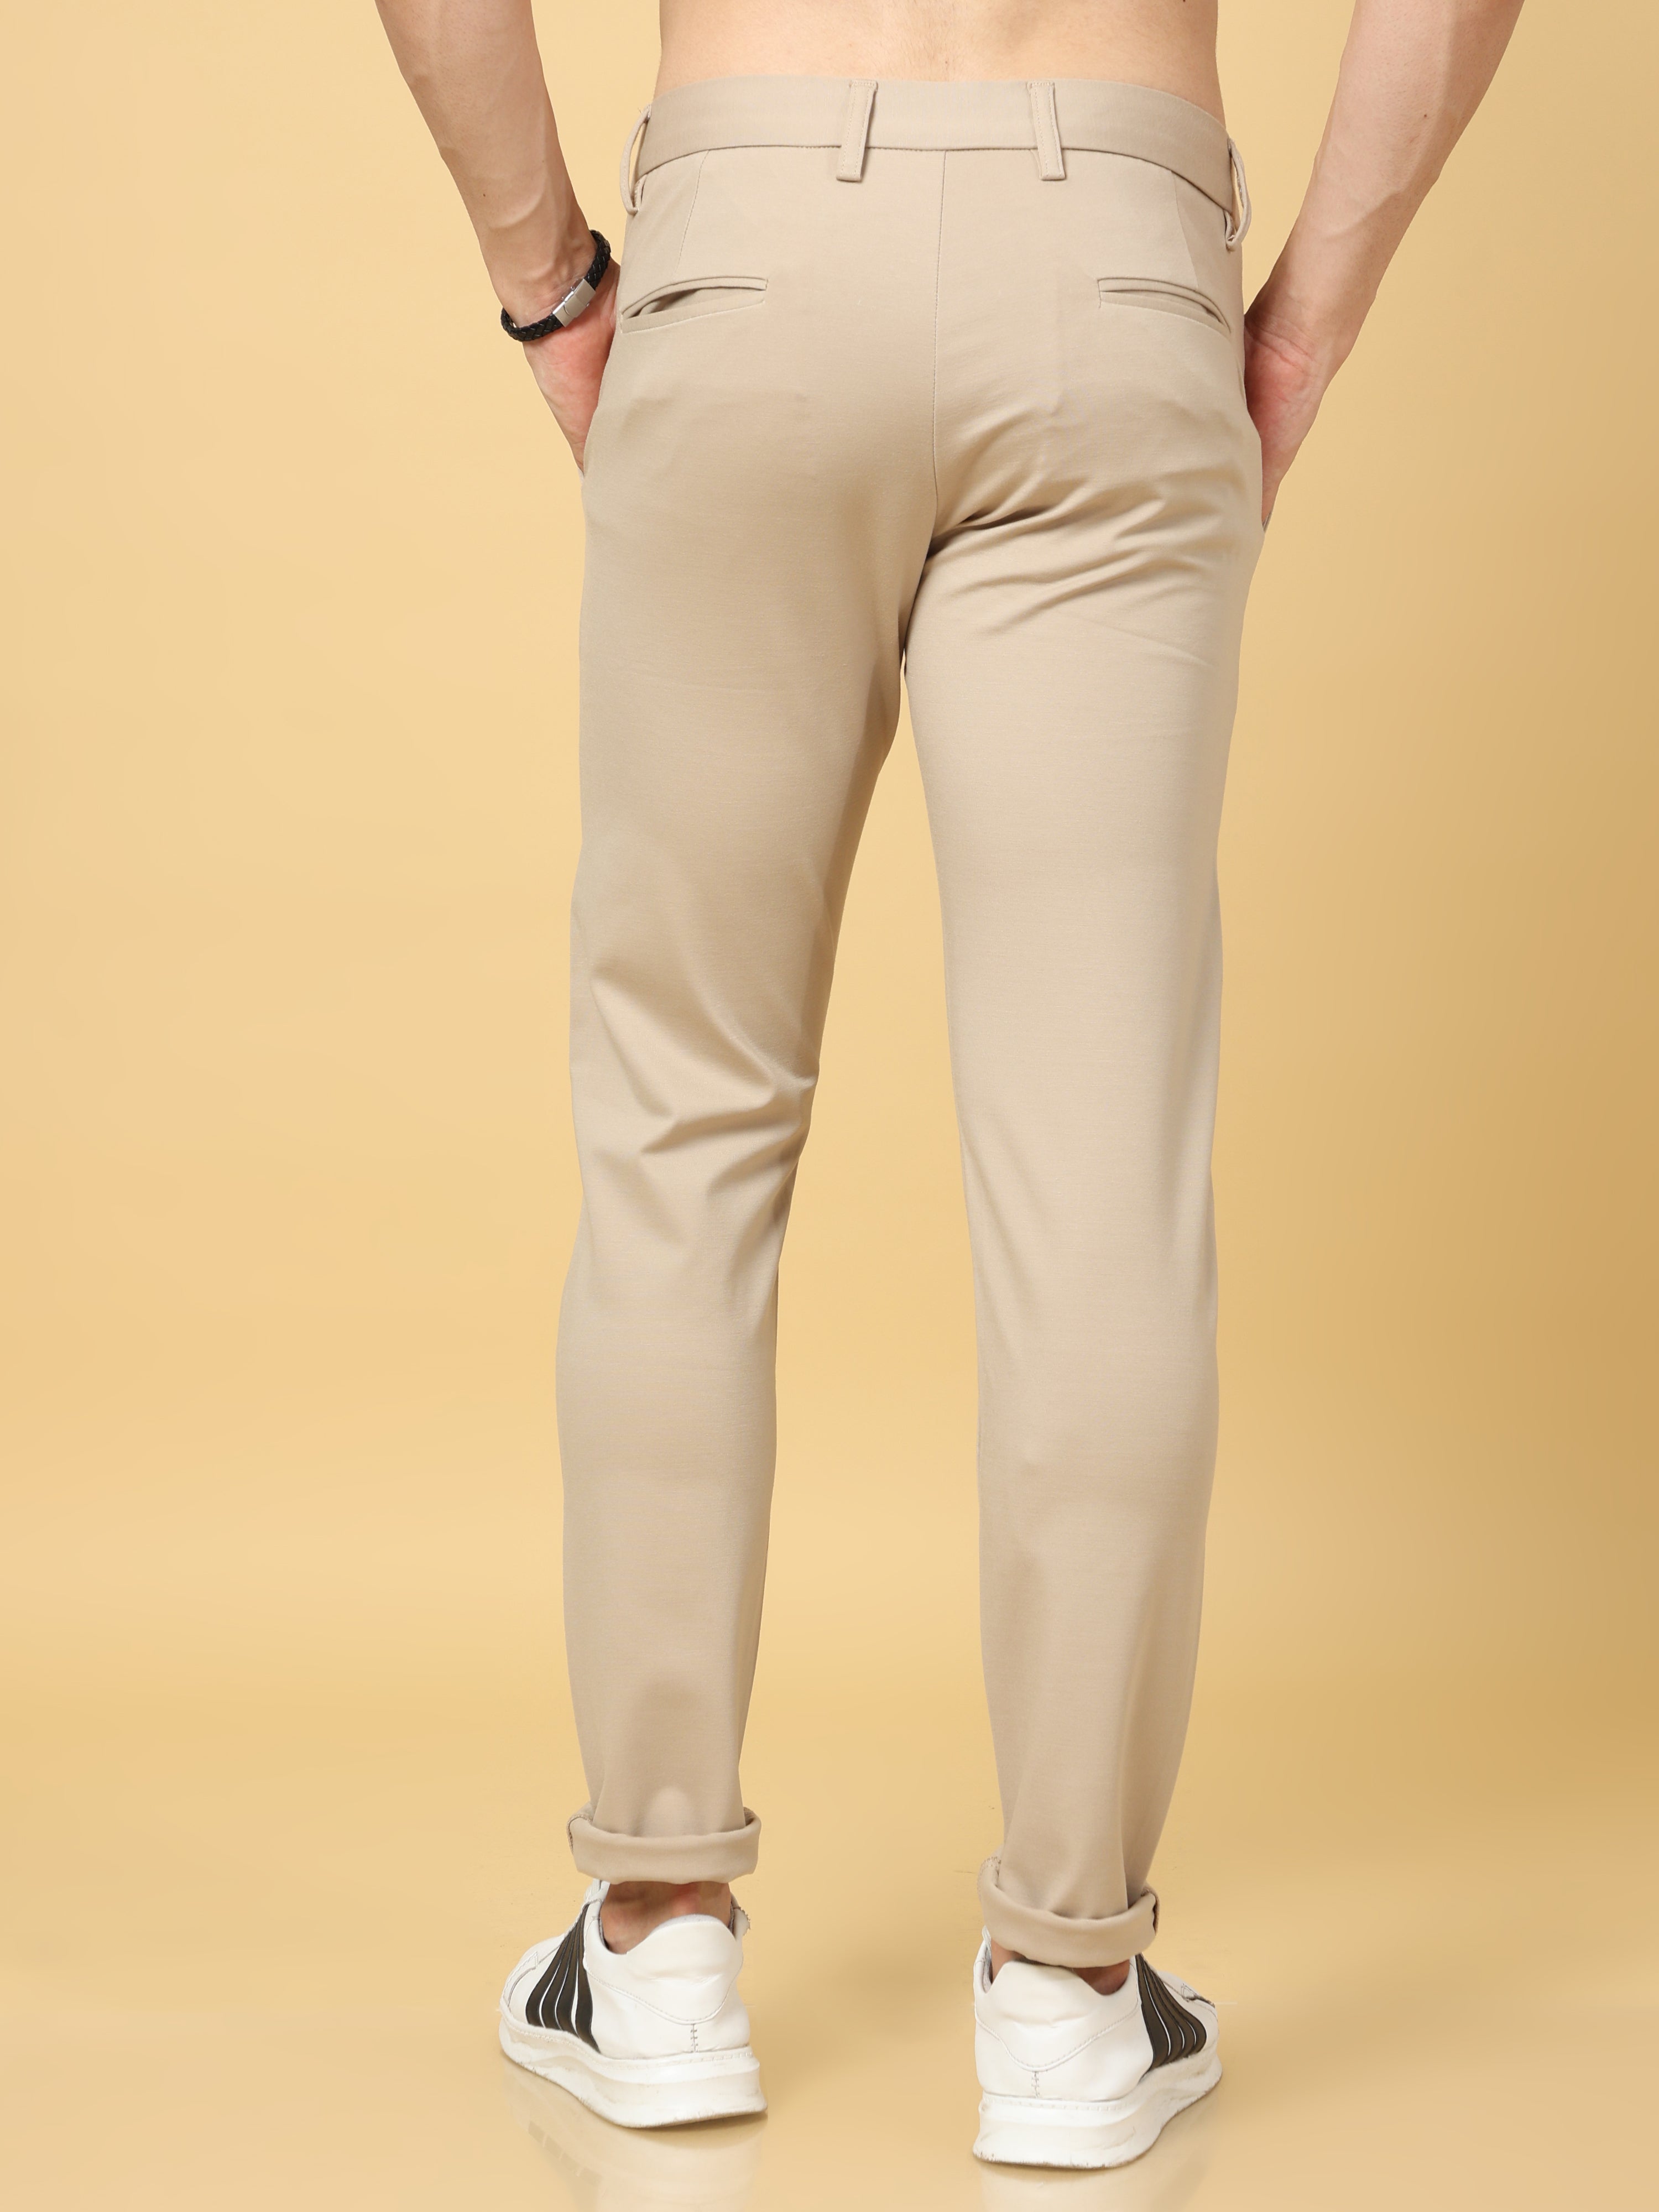 Mens Stretch Skinny Slim Fit Pants Wedding Business Work Formal Trousers  Solid | eBay